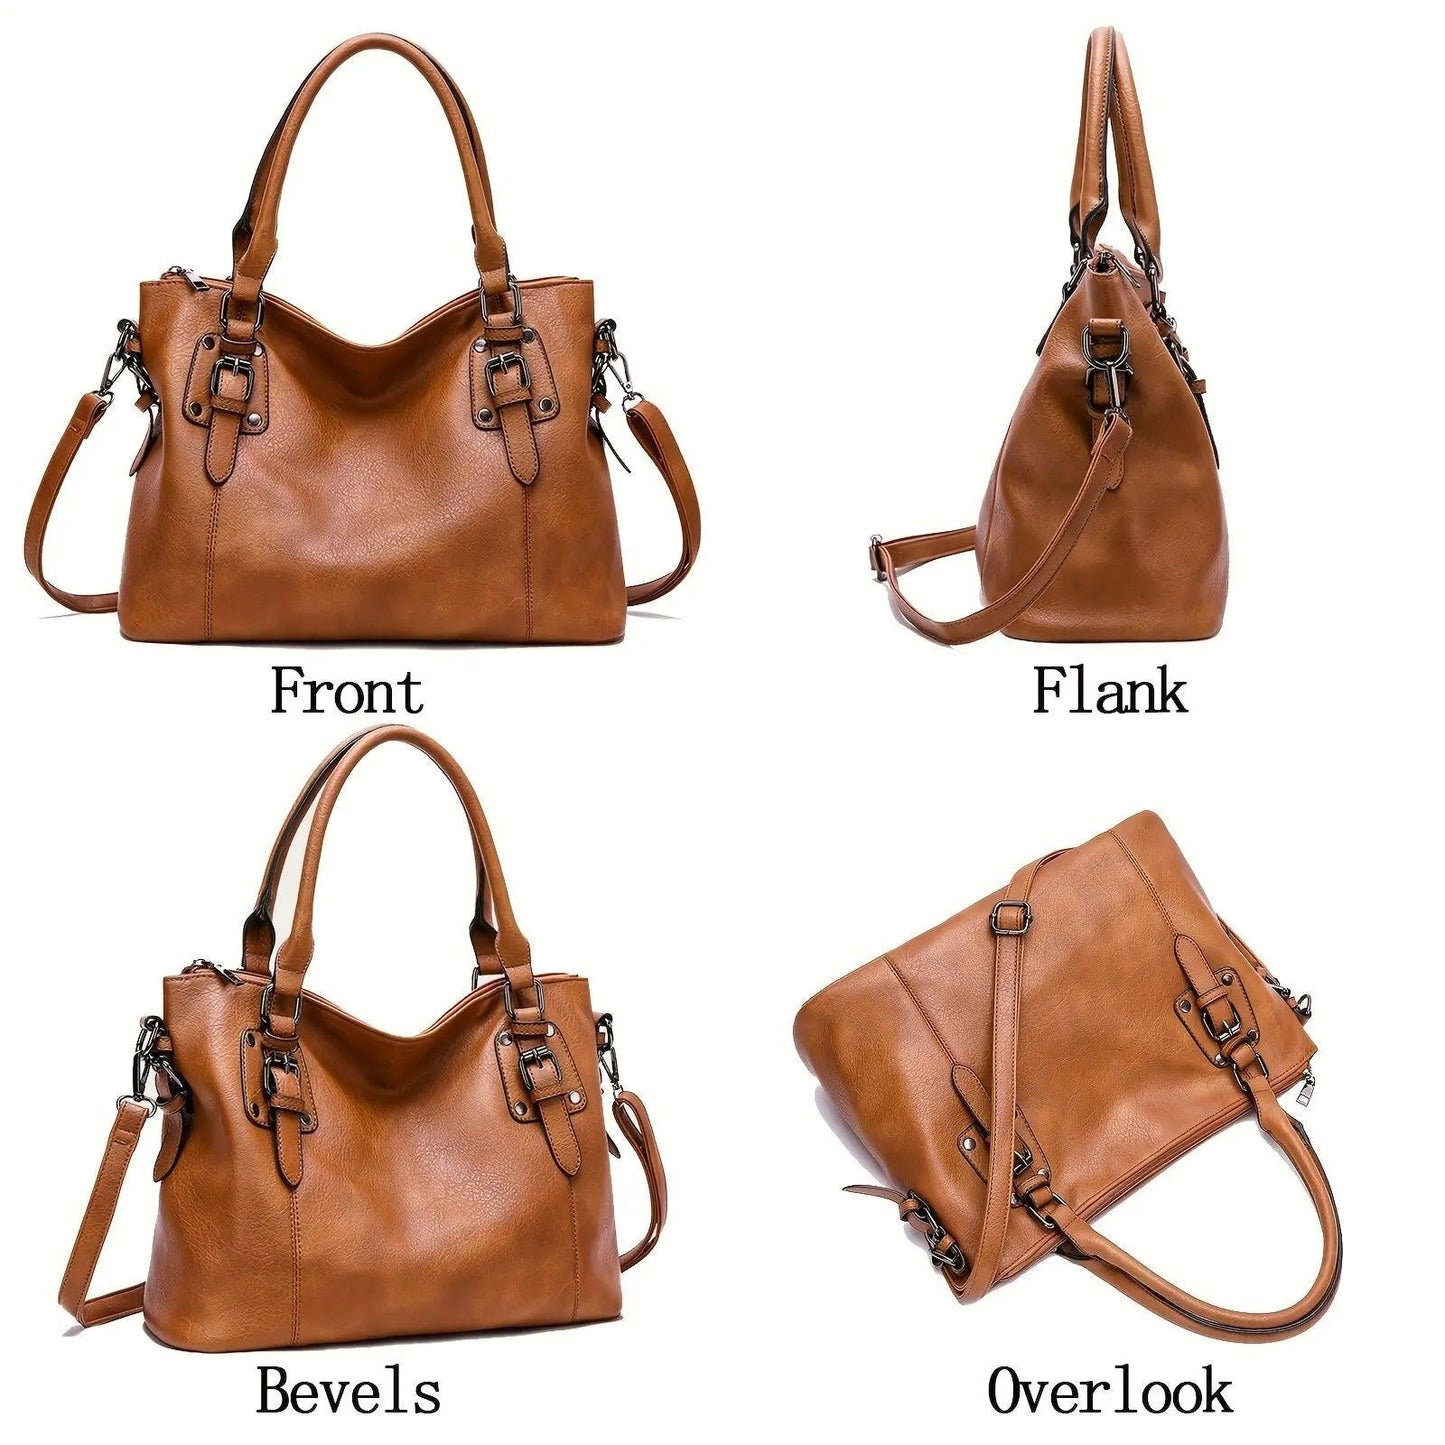 Soft Pu Leather Handbag - Your Shiny Clothes